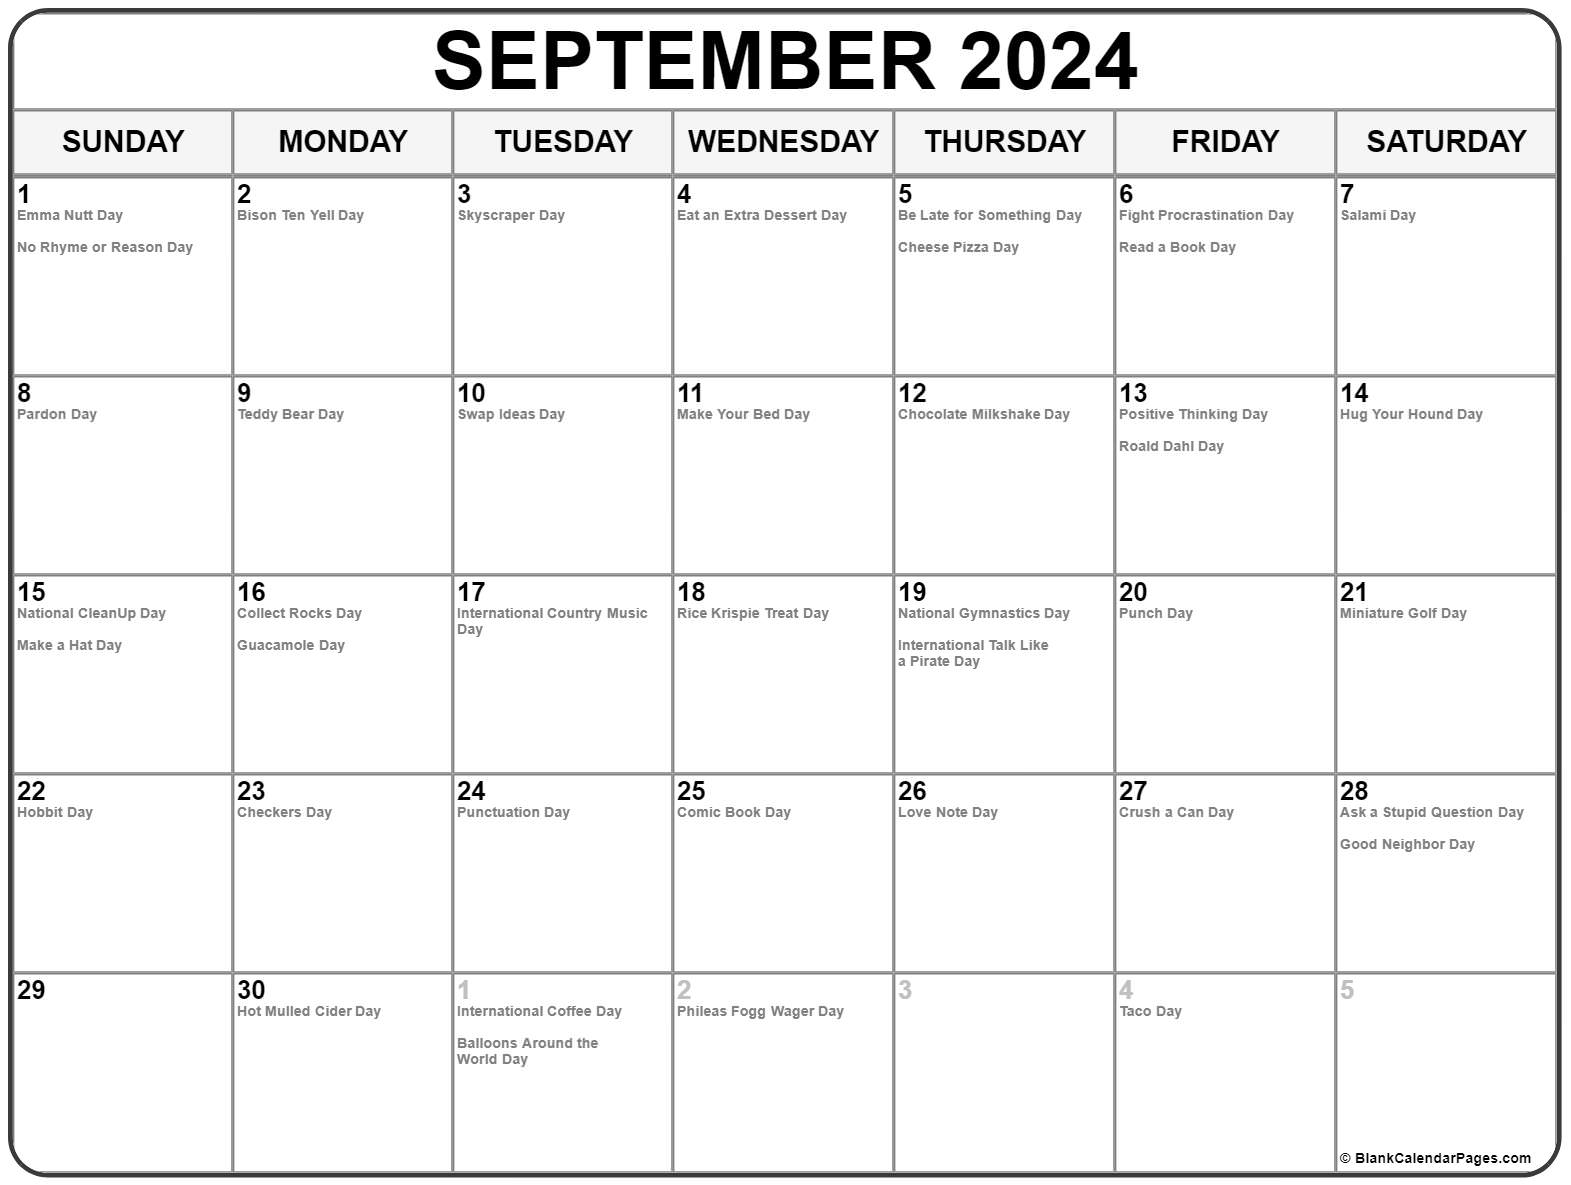 September 2022 calendar with holidays